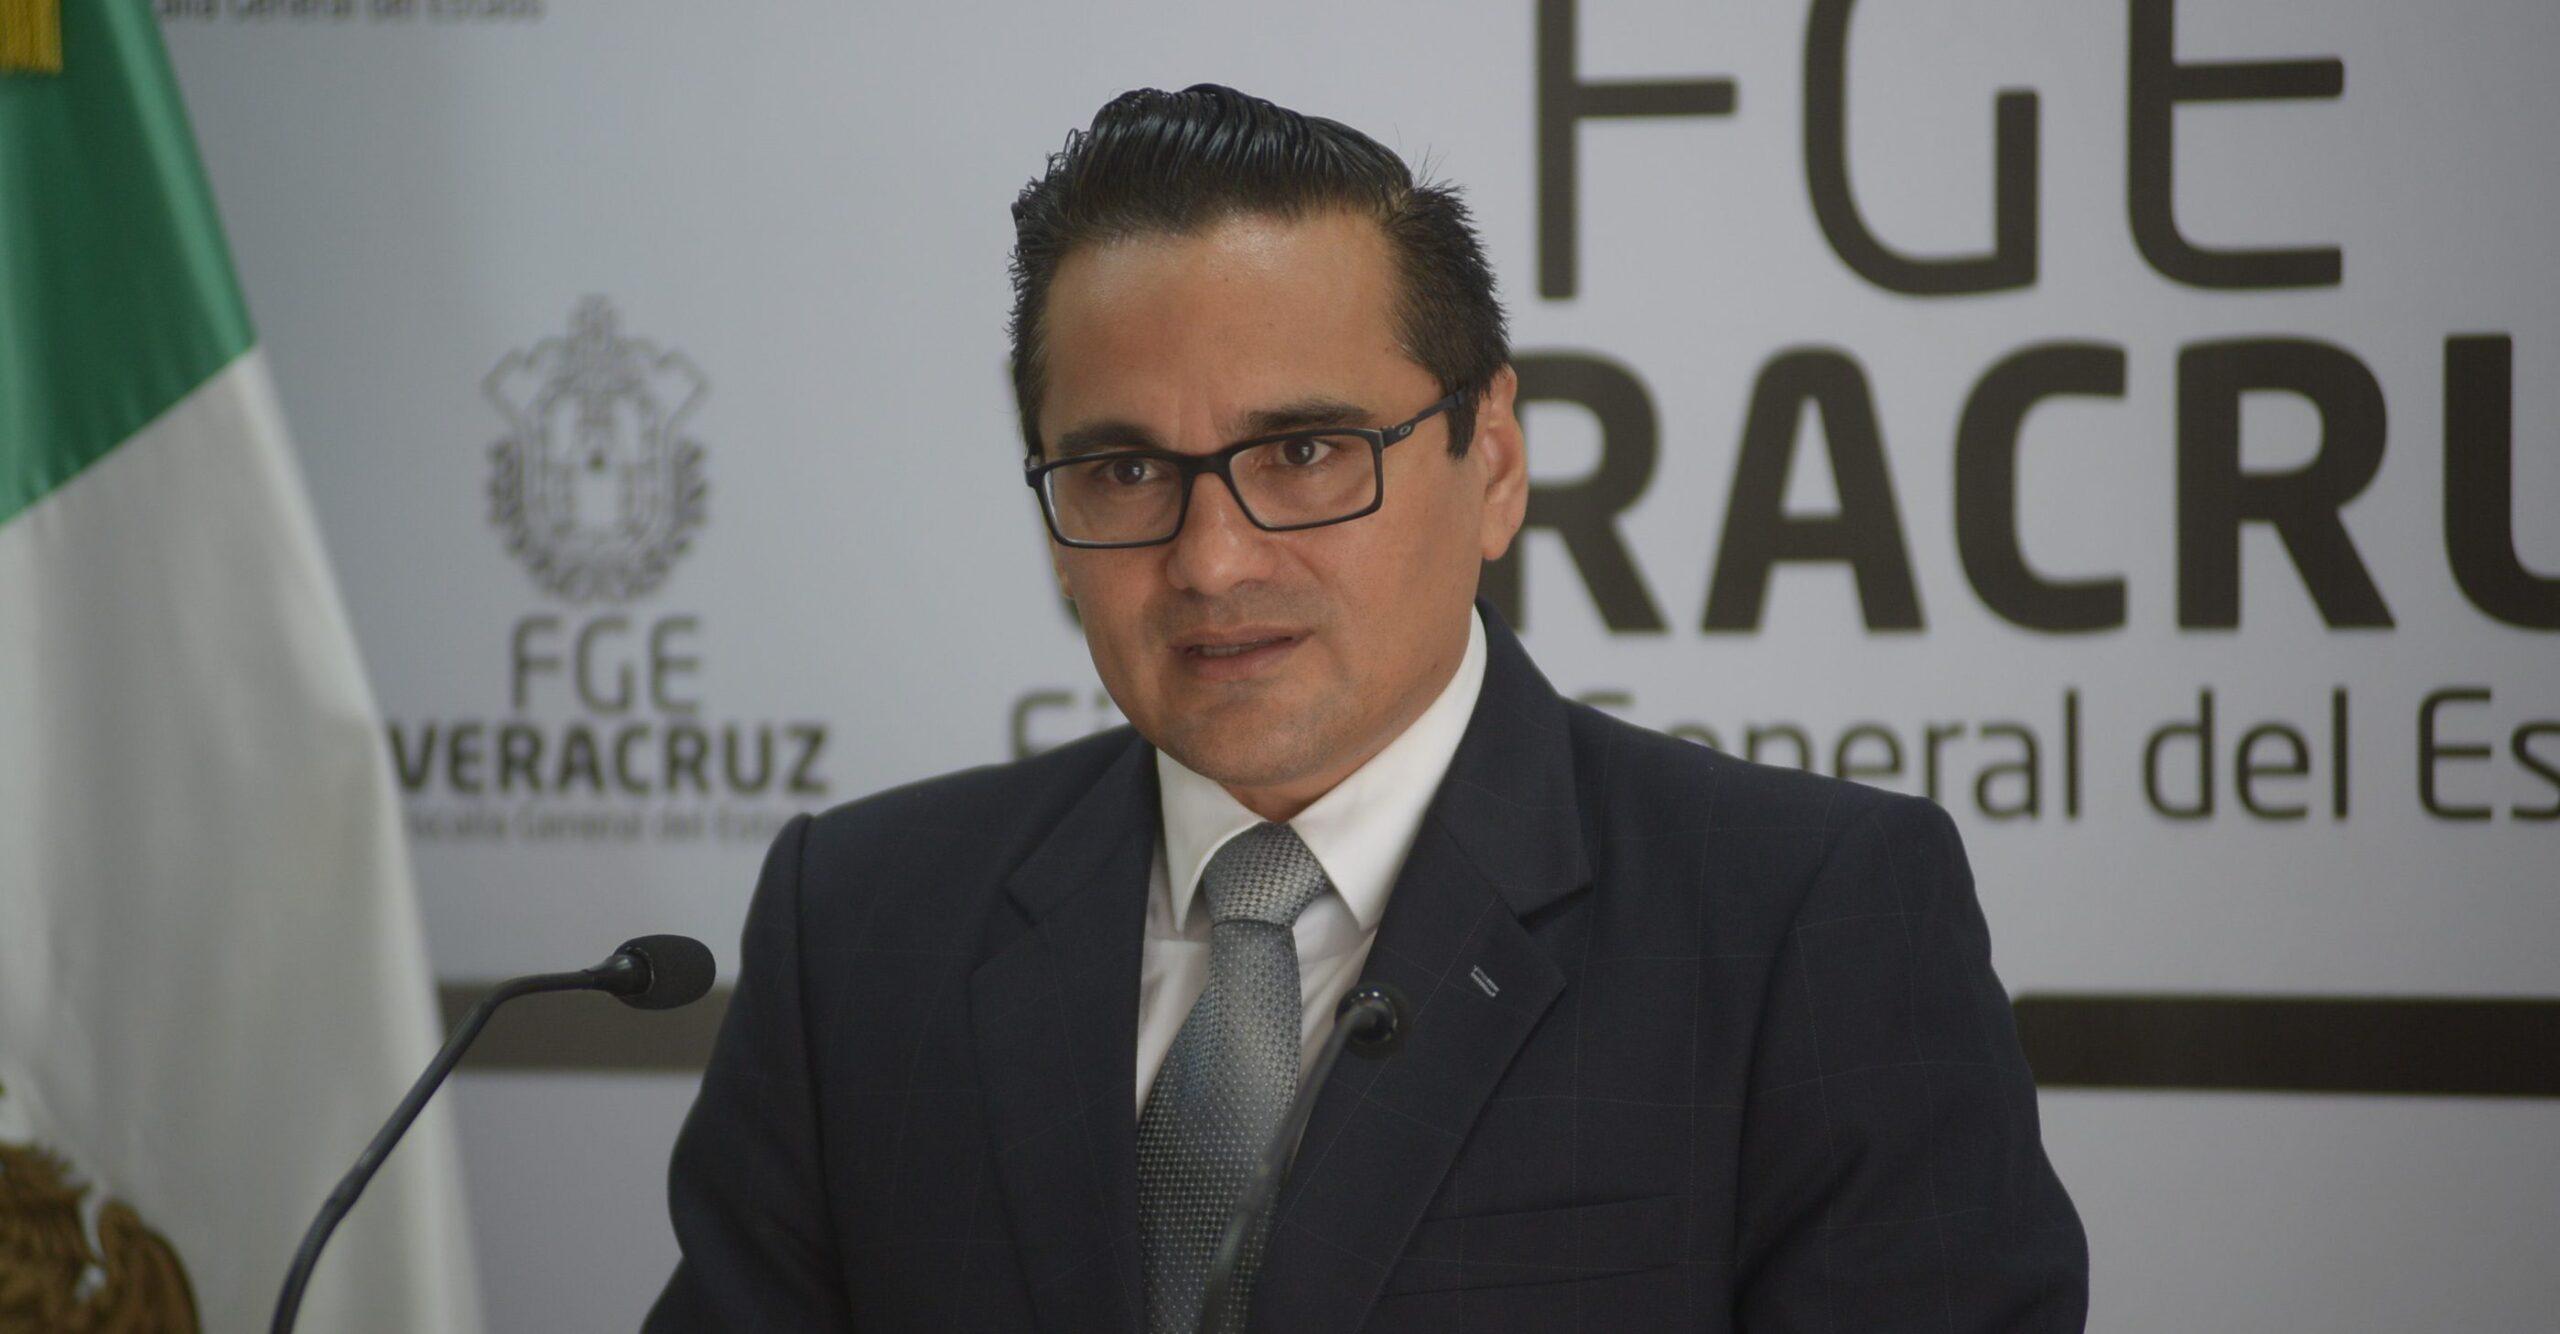 Fiscal de Veracruz debe desbloquear a periodista en Twitter, determina la Corte